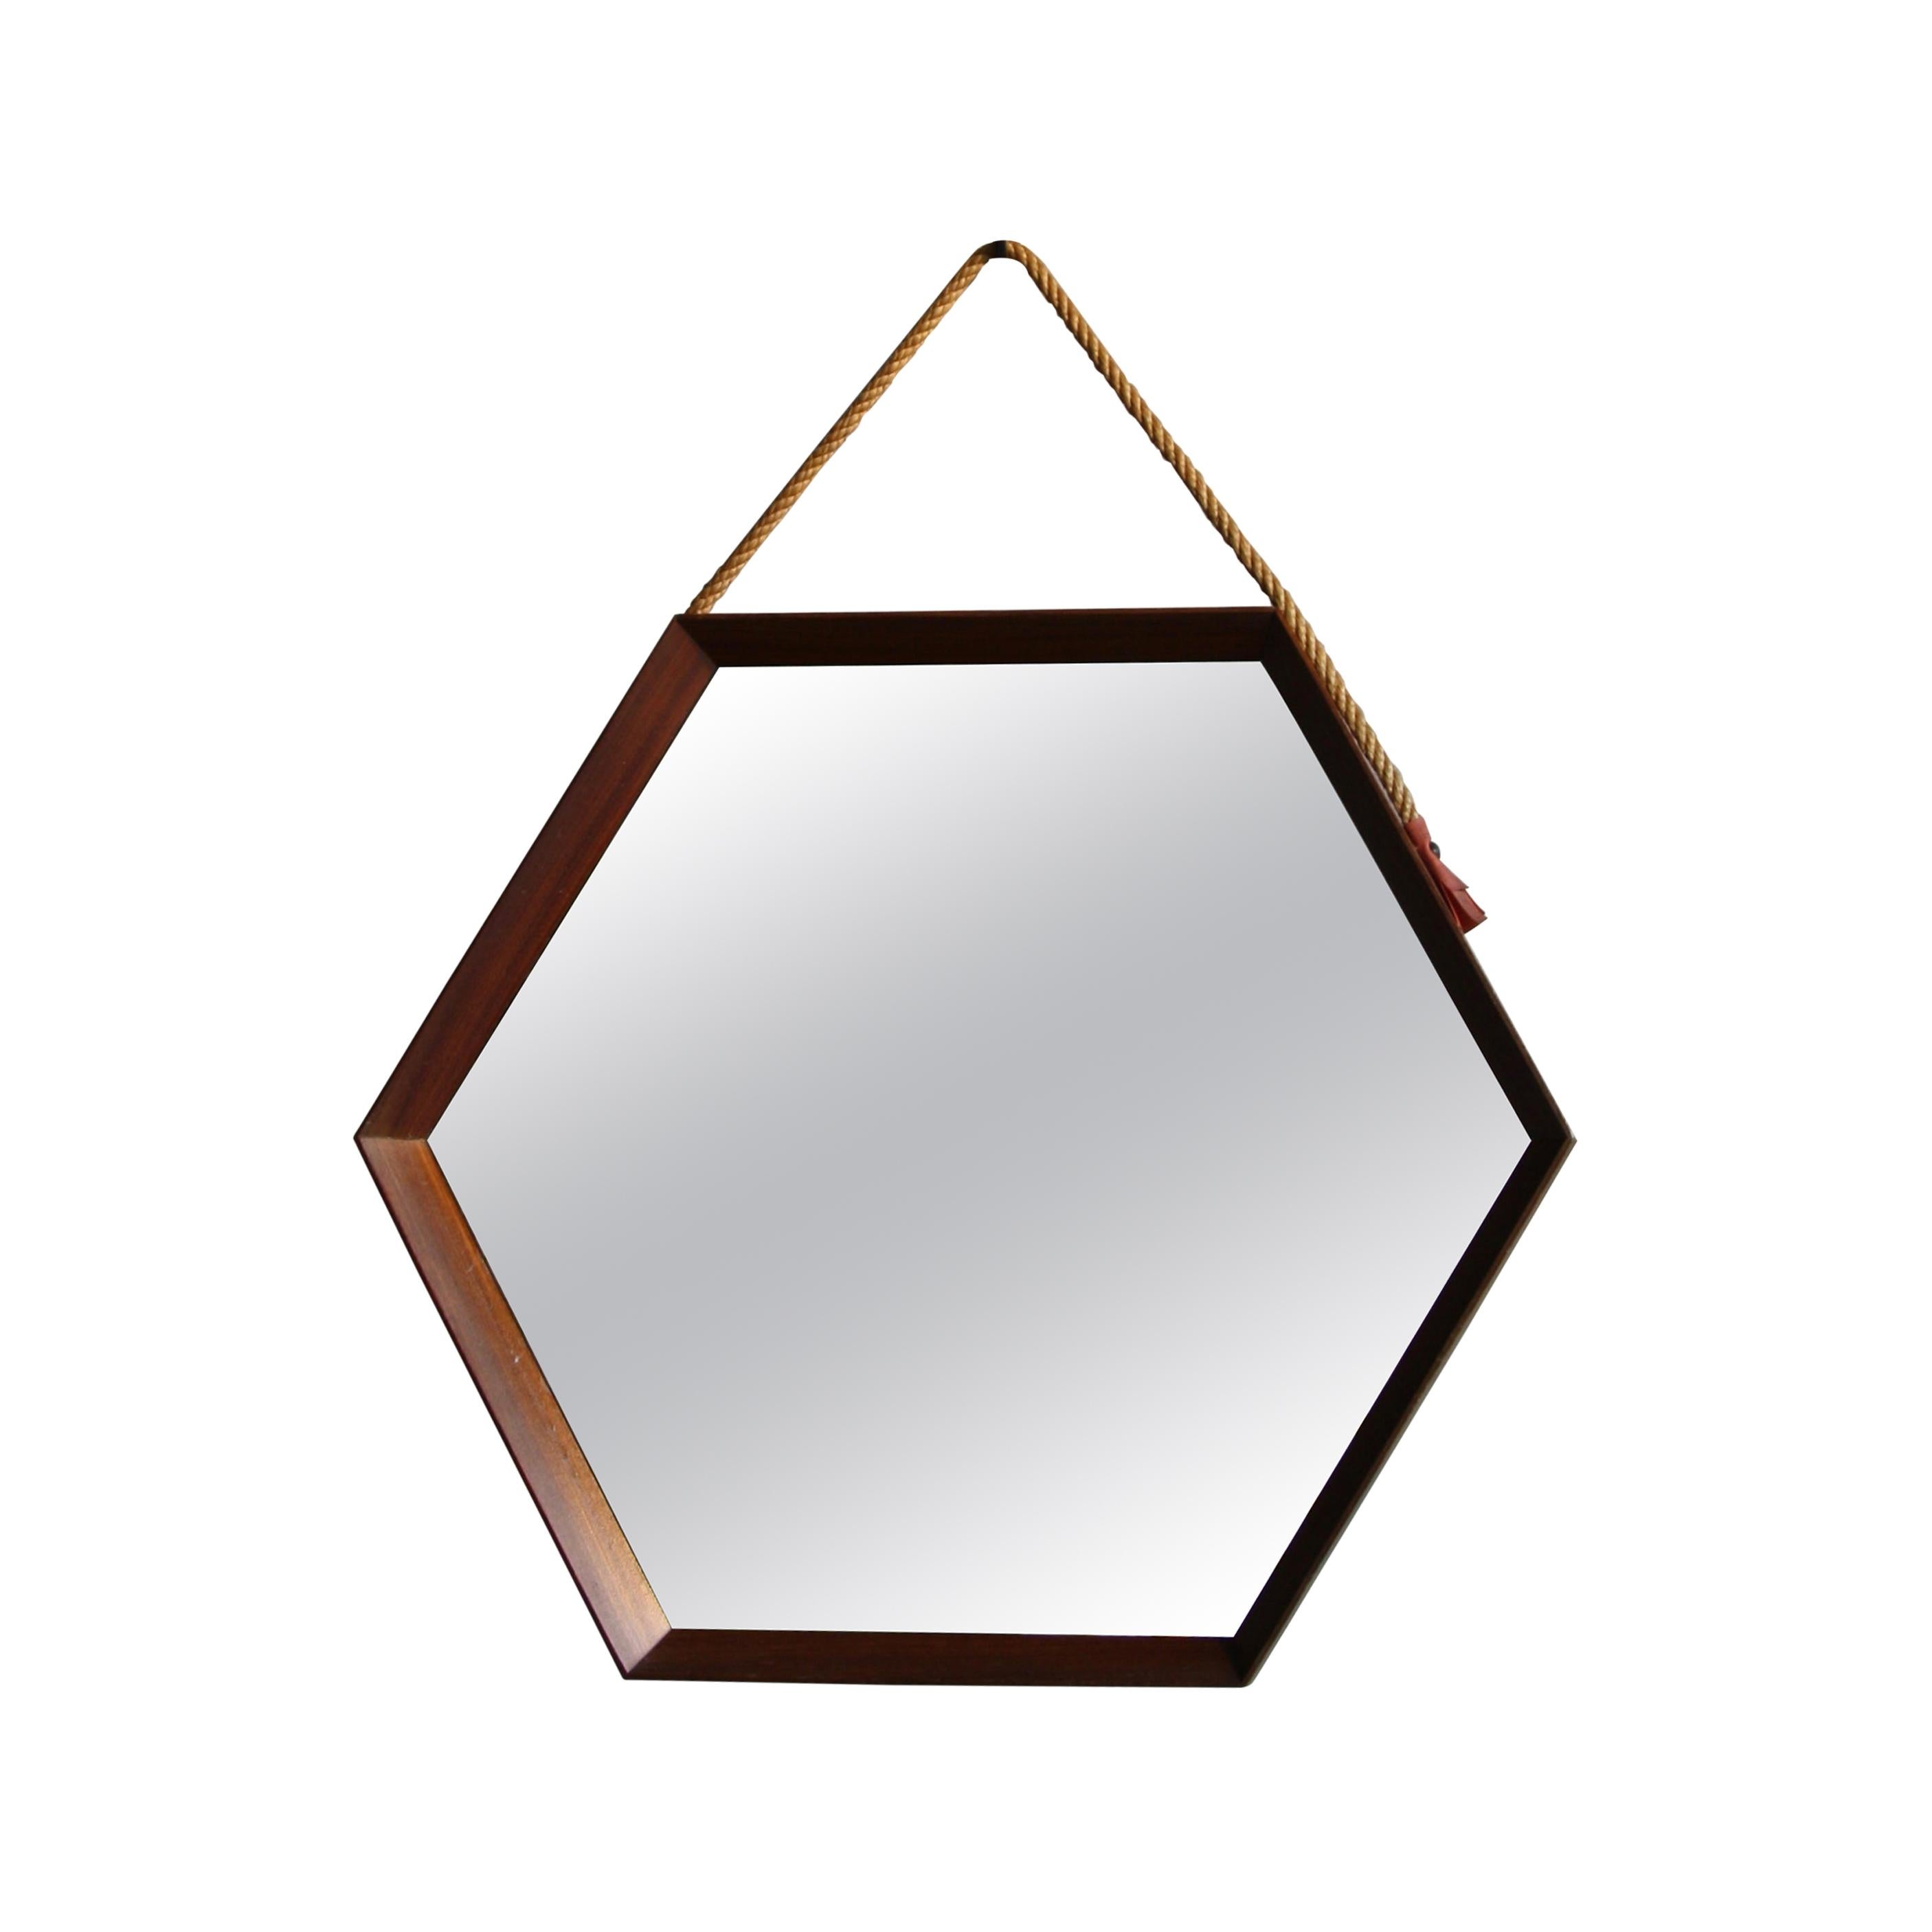 Vintage Hexagonal Teak Wall Mirror with String Hanging Strap Made in Denmark